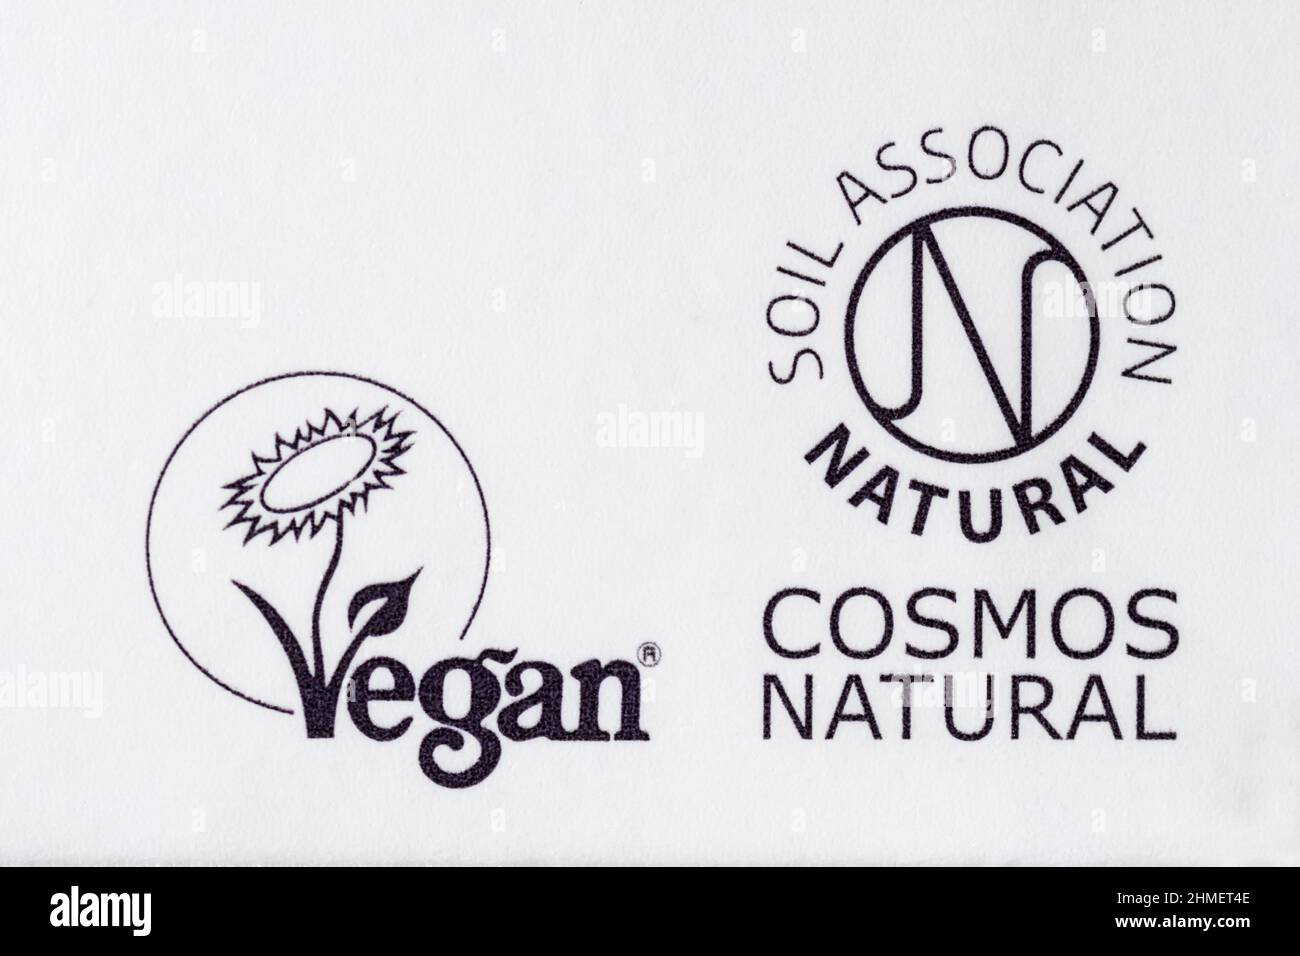 Vegan and Cosmos Natural certification logos on cosmetics. Stock Photo